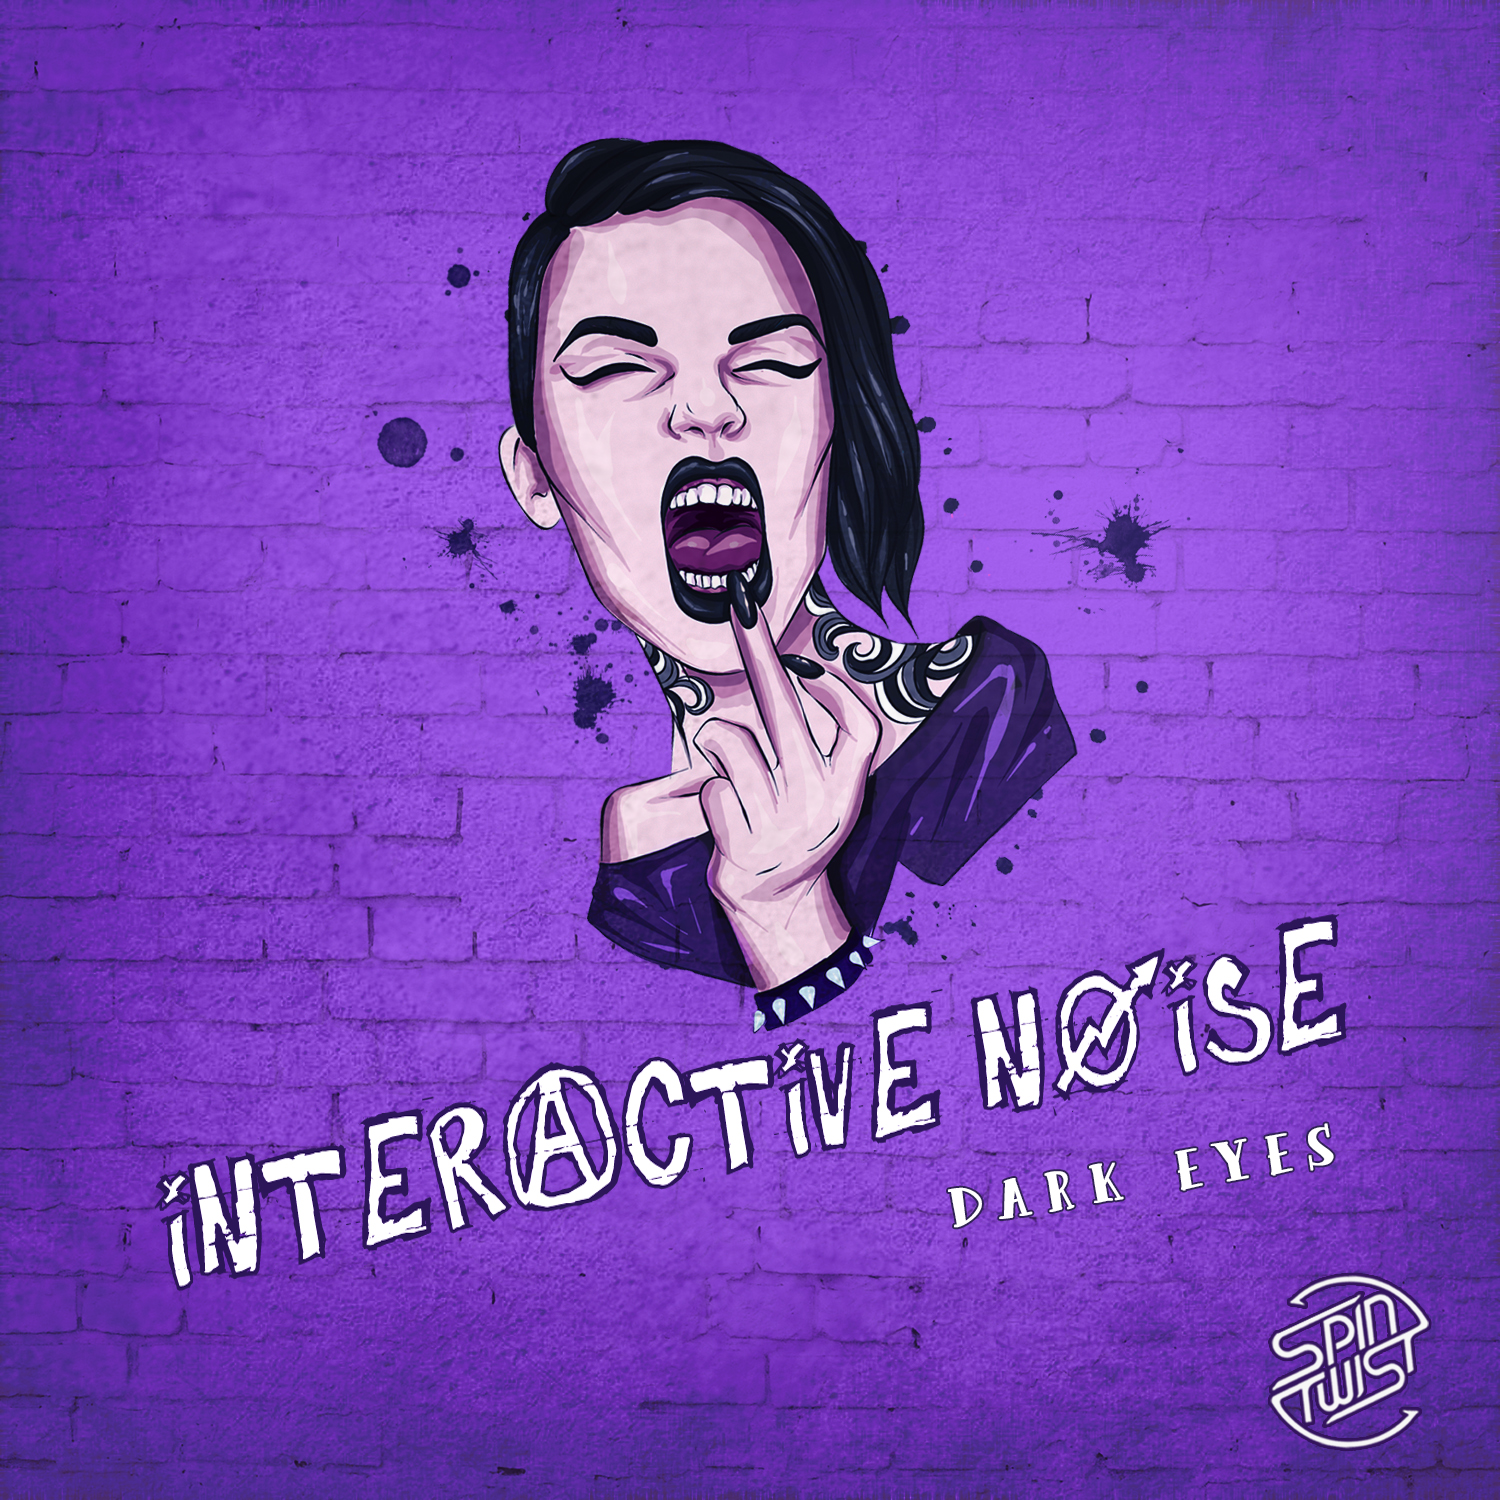 Interactive Noise - Dark eyes ( 1500 X 1500).jpg